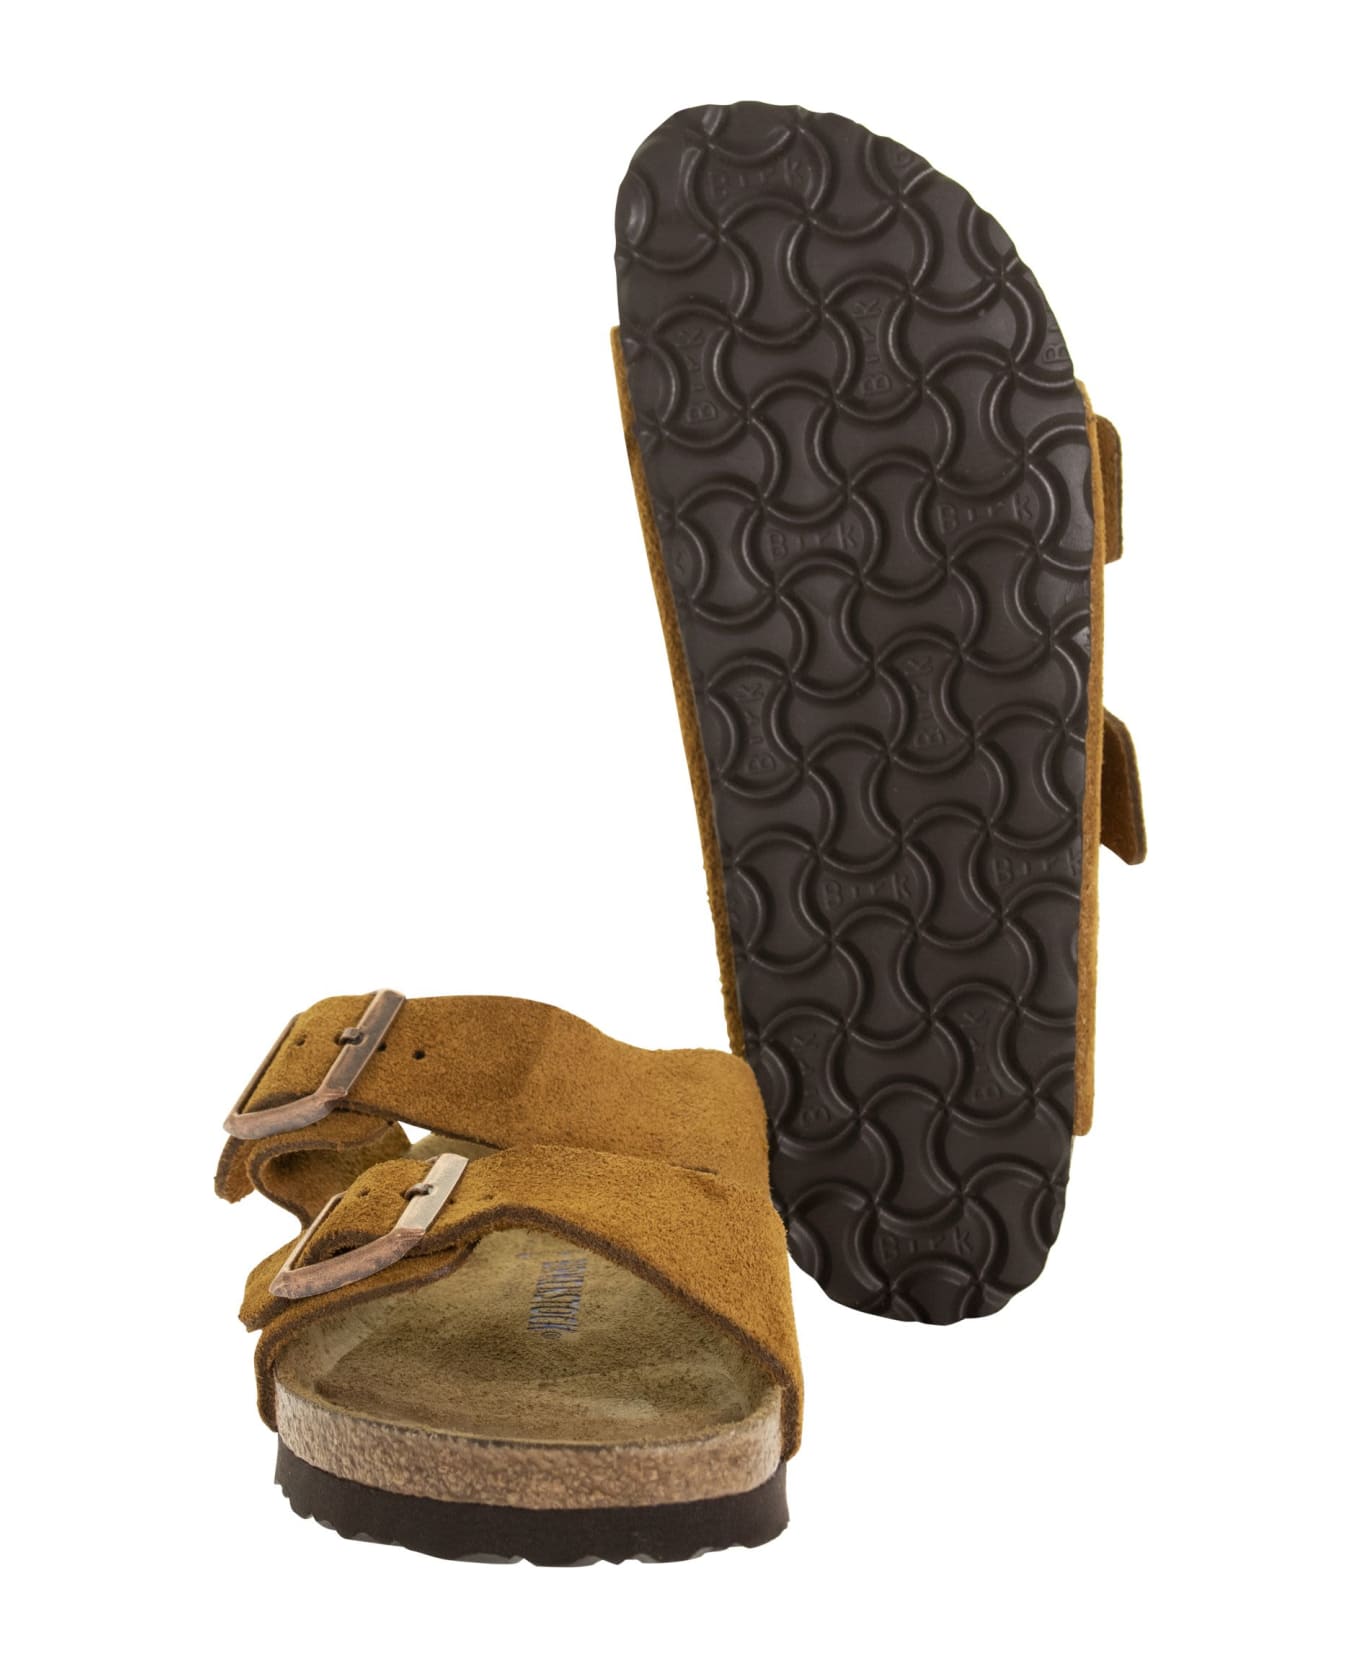 Birkenstock Arizona - Suede Leather Slipper - Mink フラットシューズ